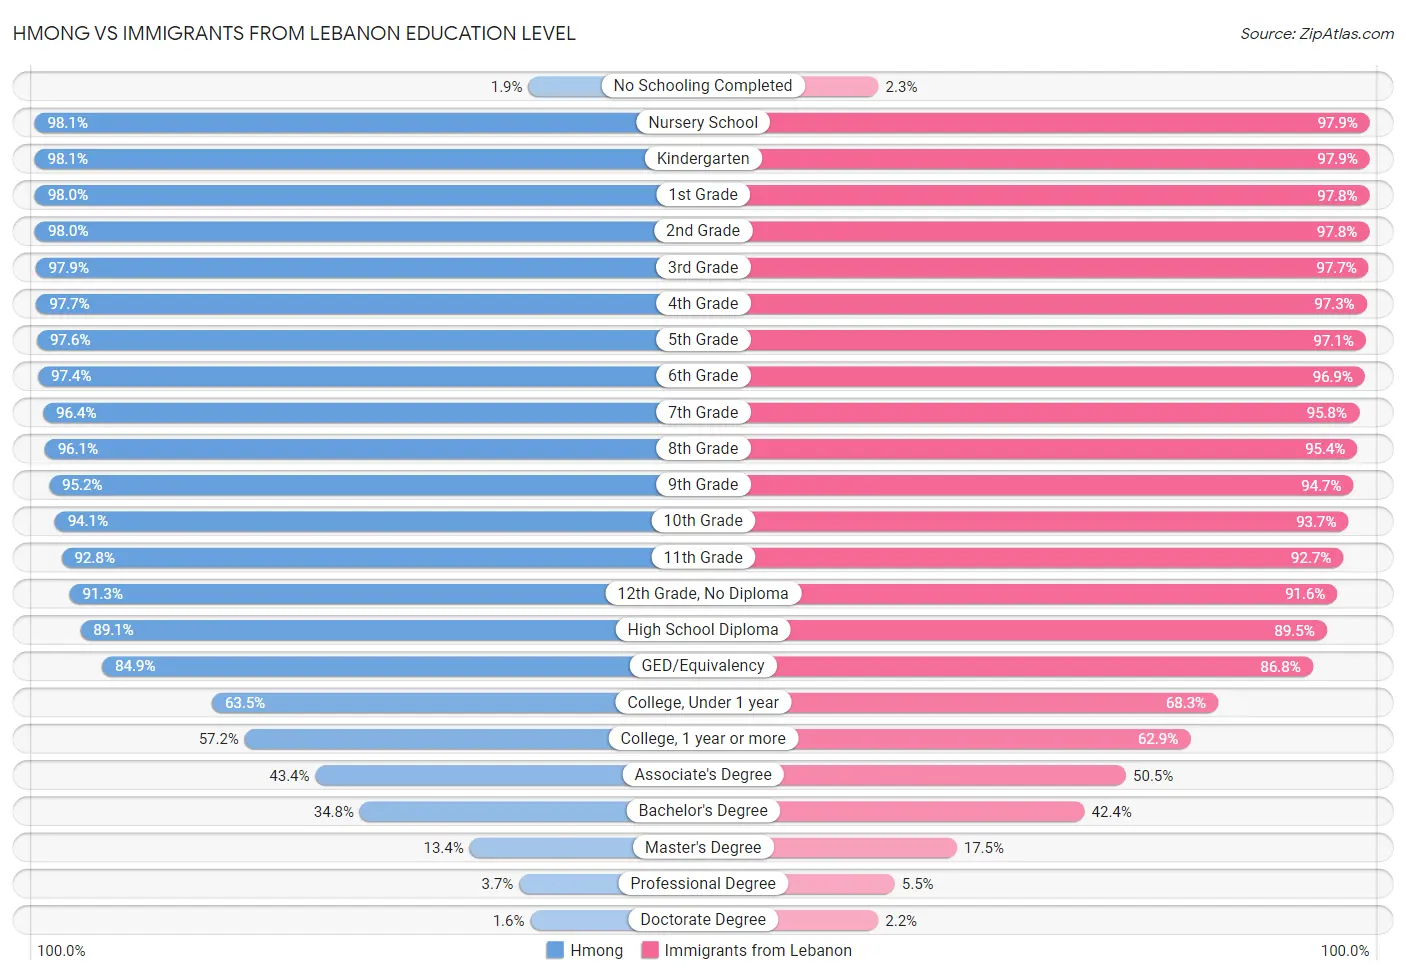 Hmong vs Immigrants from Lebanon Education Level